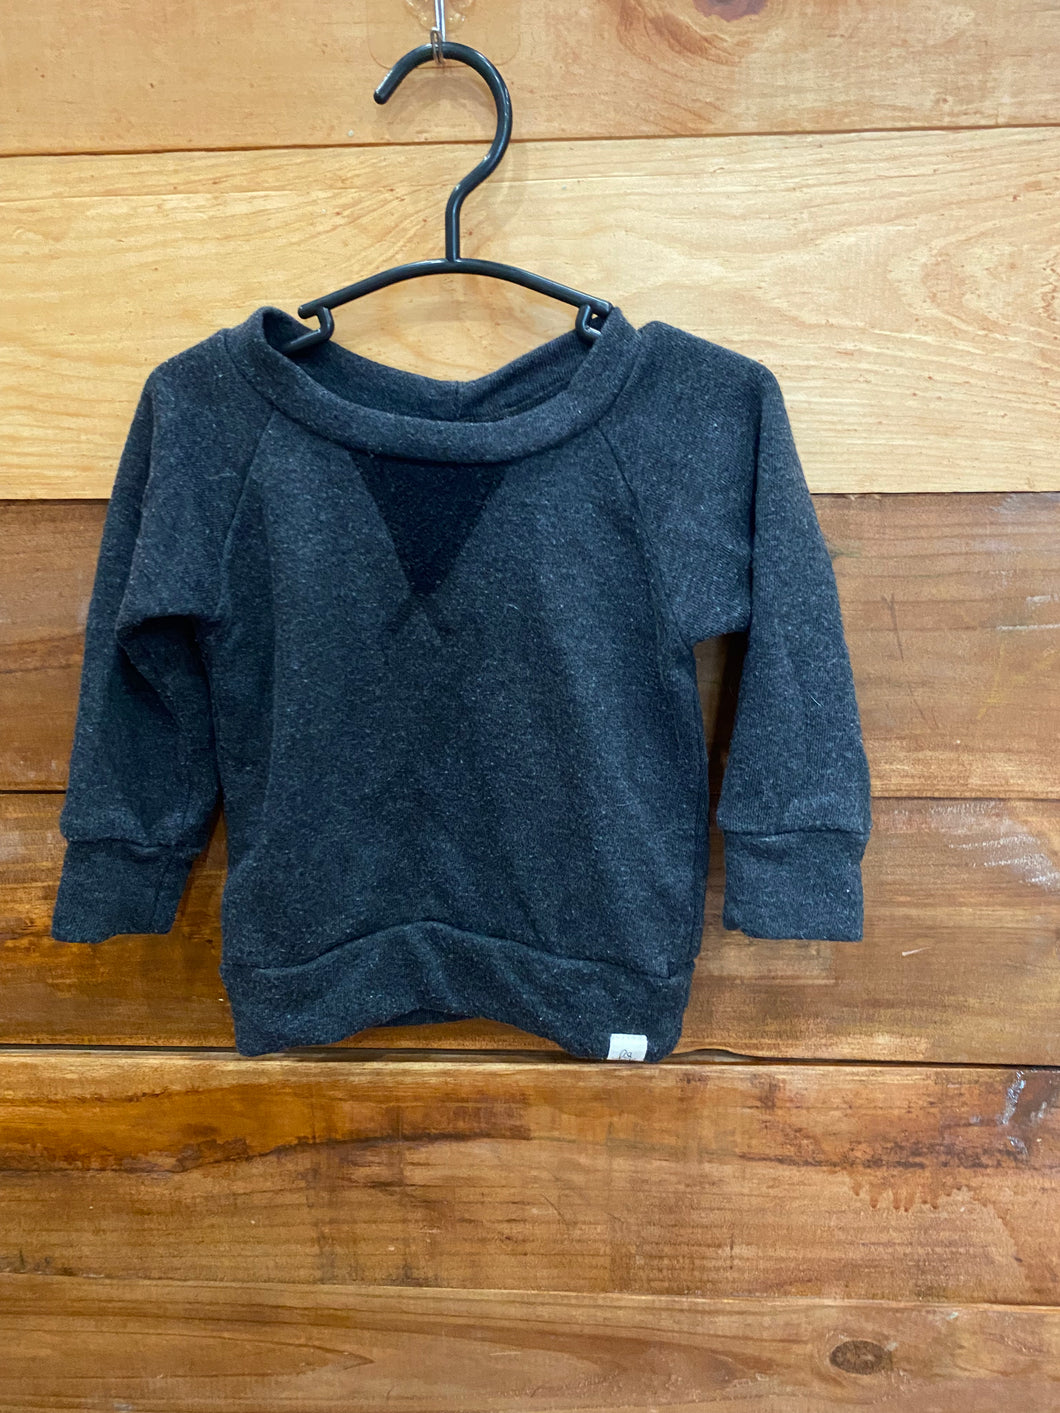 Lulu & Roo Charcoal Sweater Size 6-12m